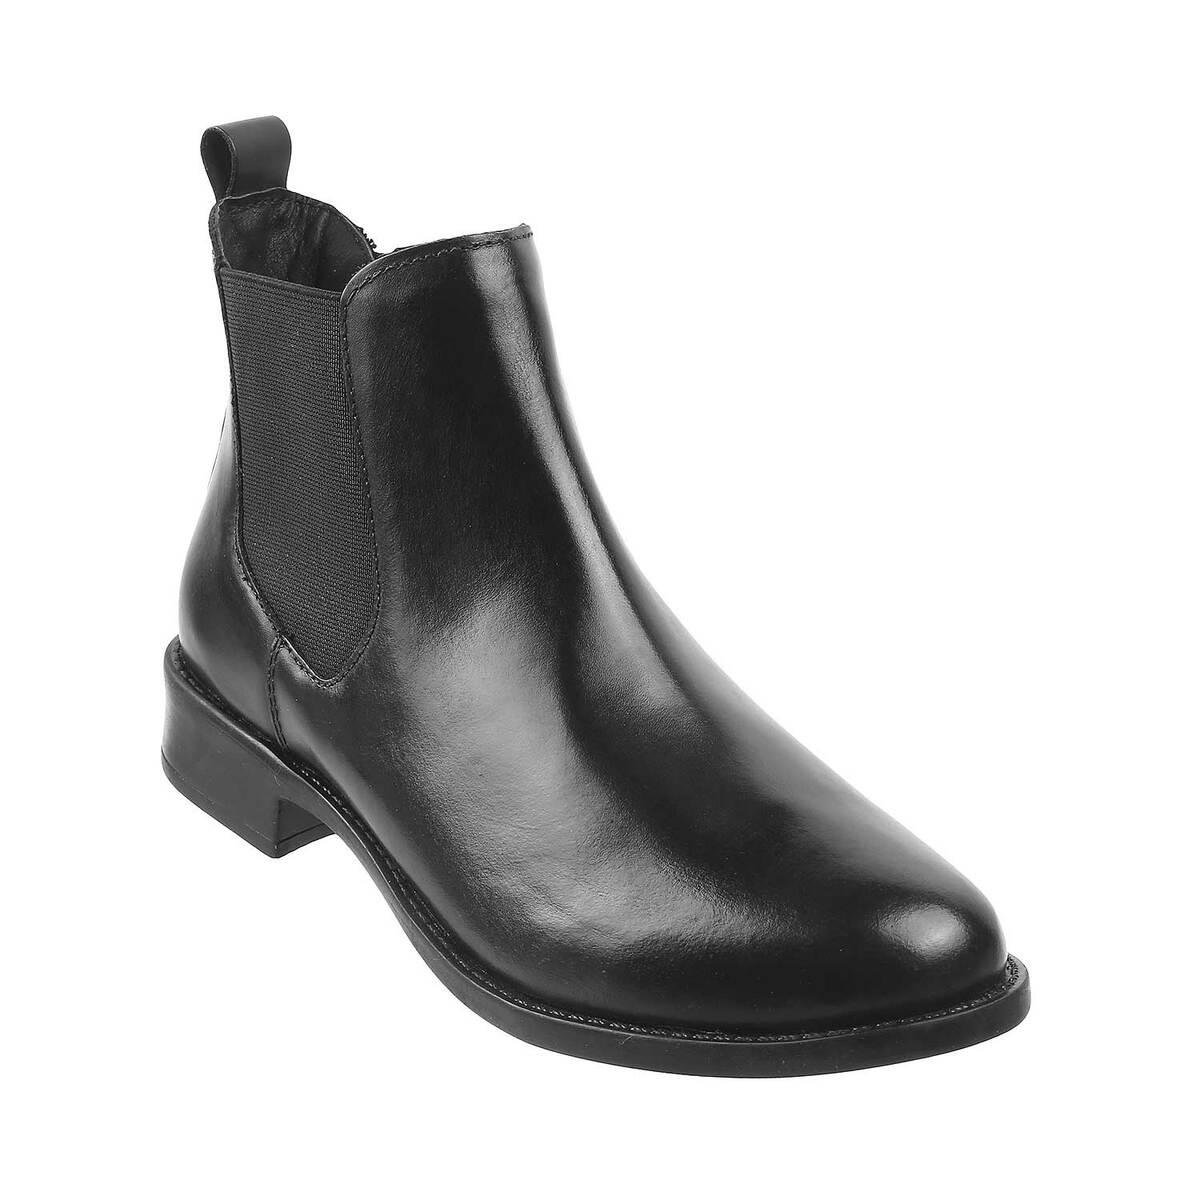 Buy Metro Women Black Party Boots Online | SKU: 31-4826-11-36 - Metro Shoes